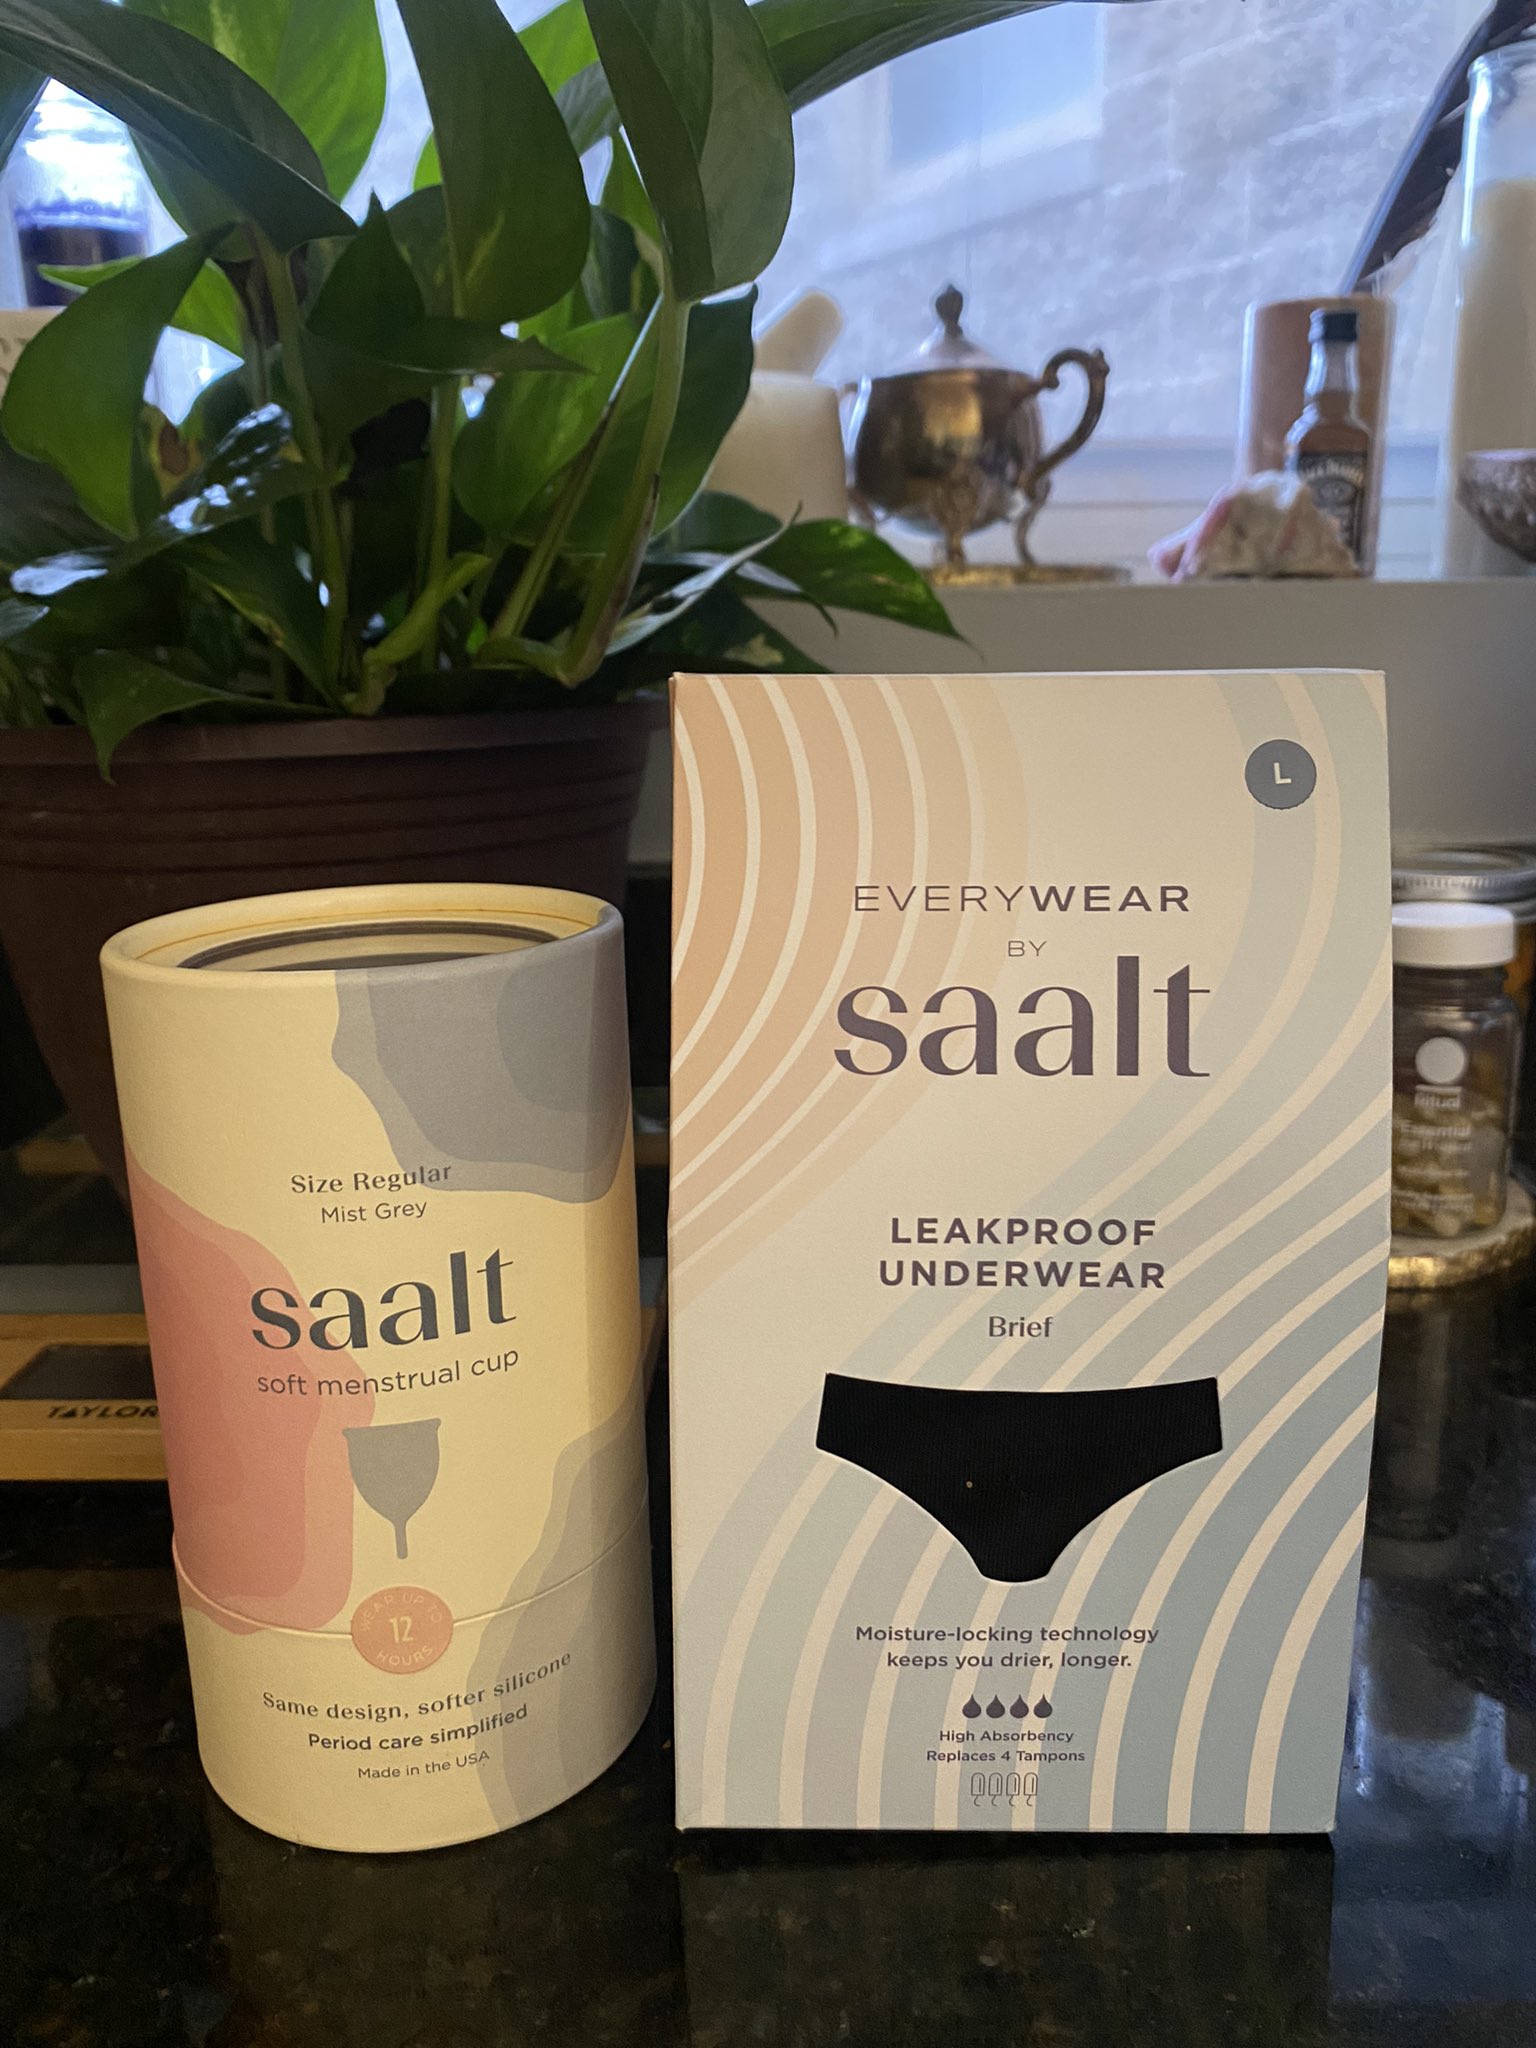 Saalt  Period Care Simplified (@Saaltco) / X